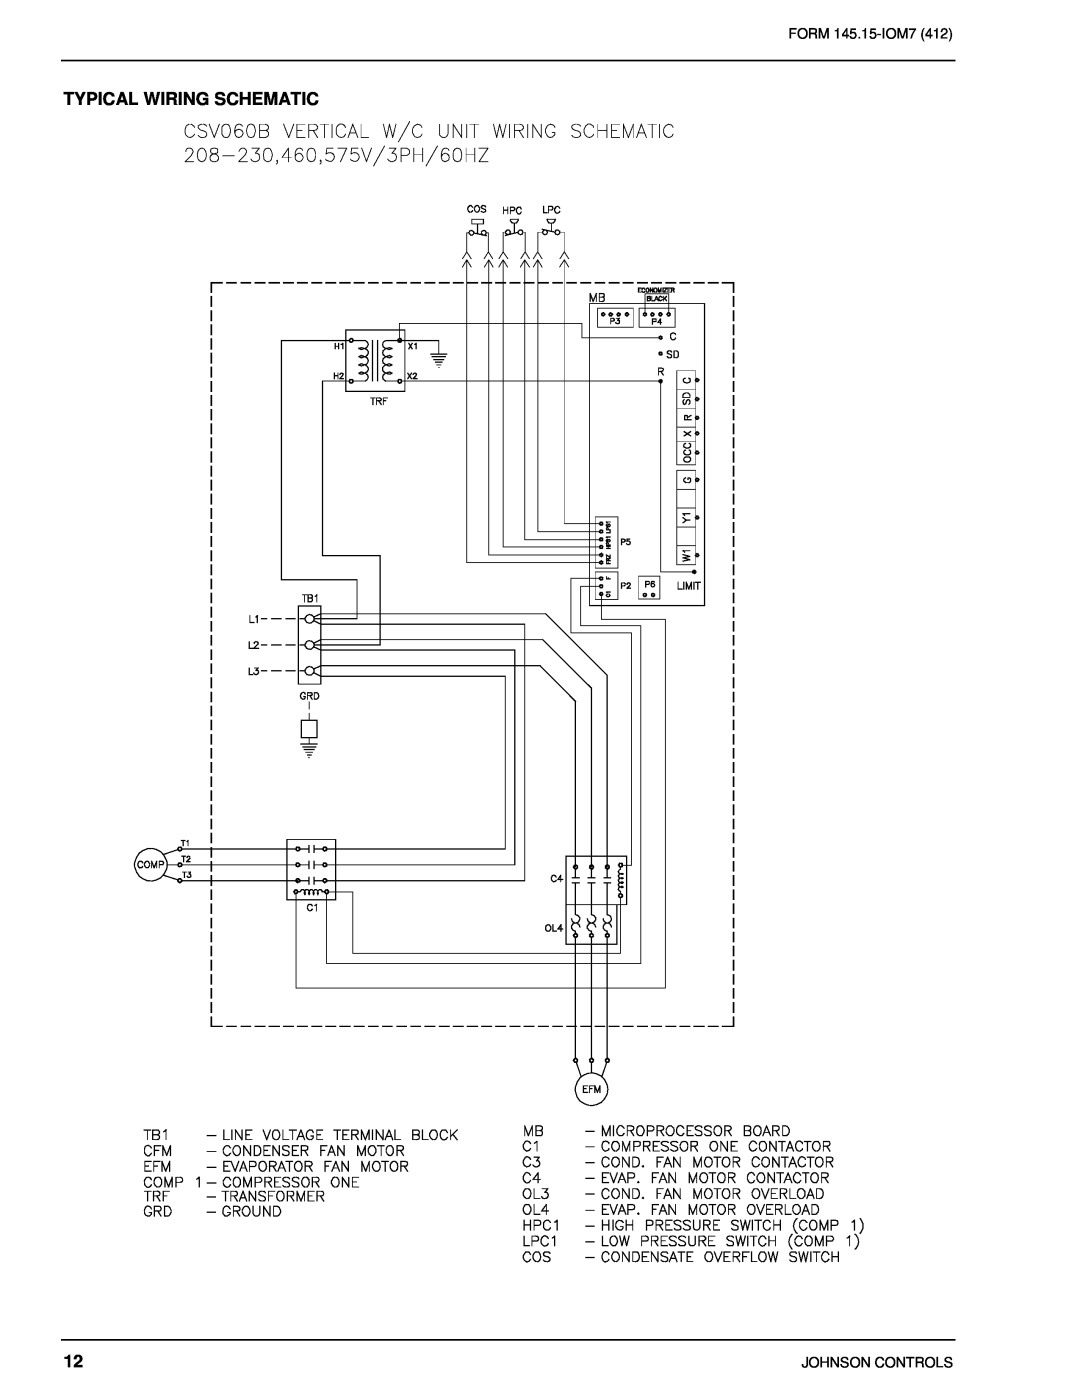 Johnson Controls CSV060B-240B installation instructions Typical Wiring Schematic, FORM 145.15-IOM7412, Johnson Controls 